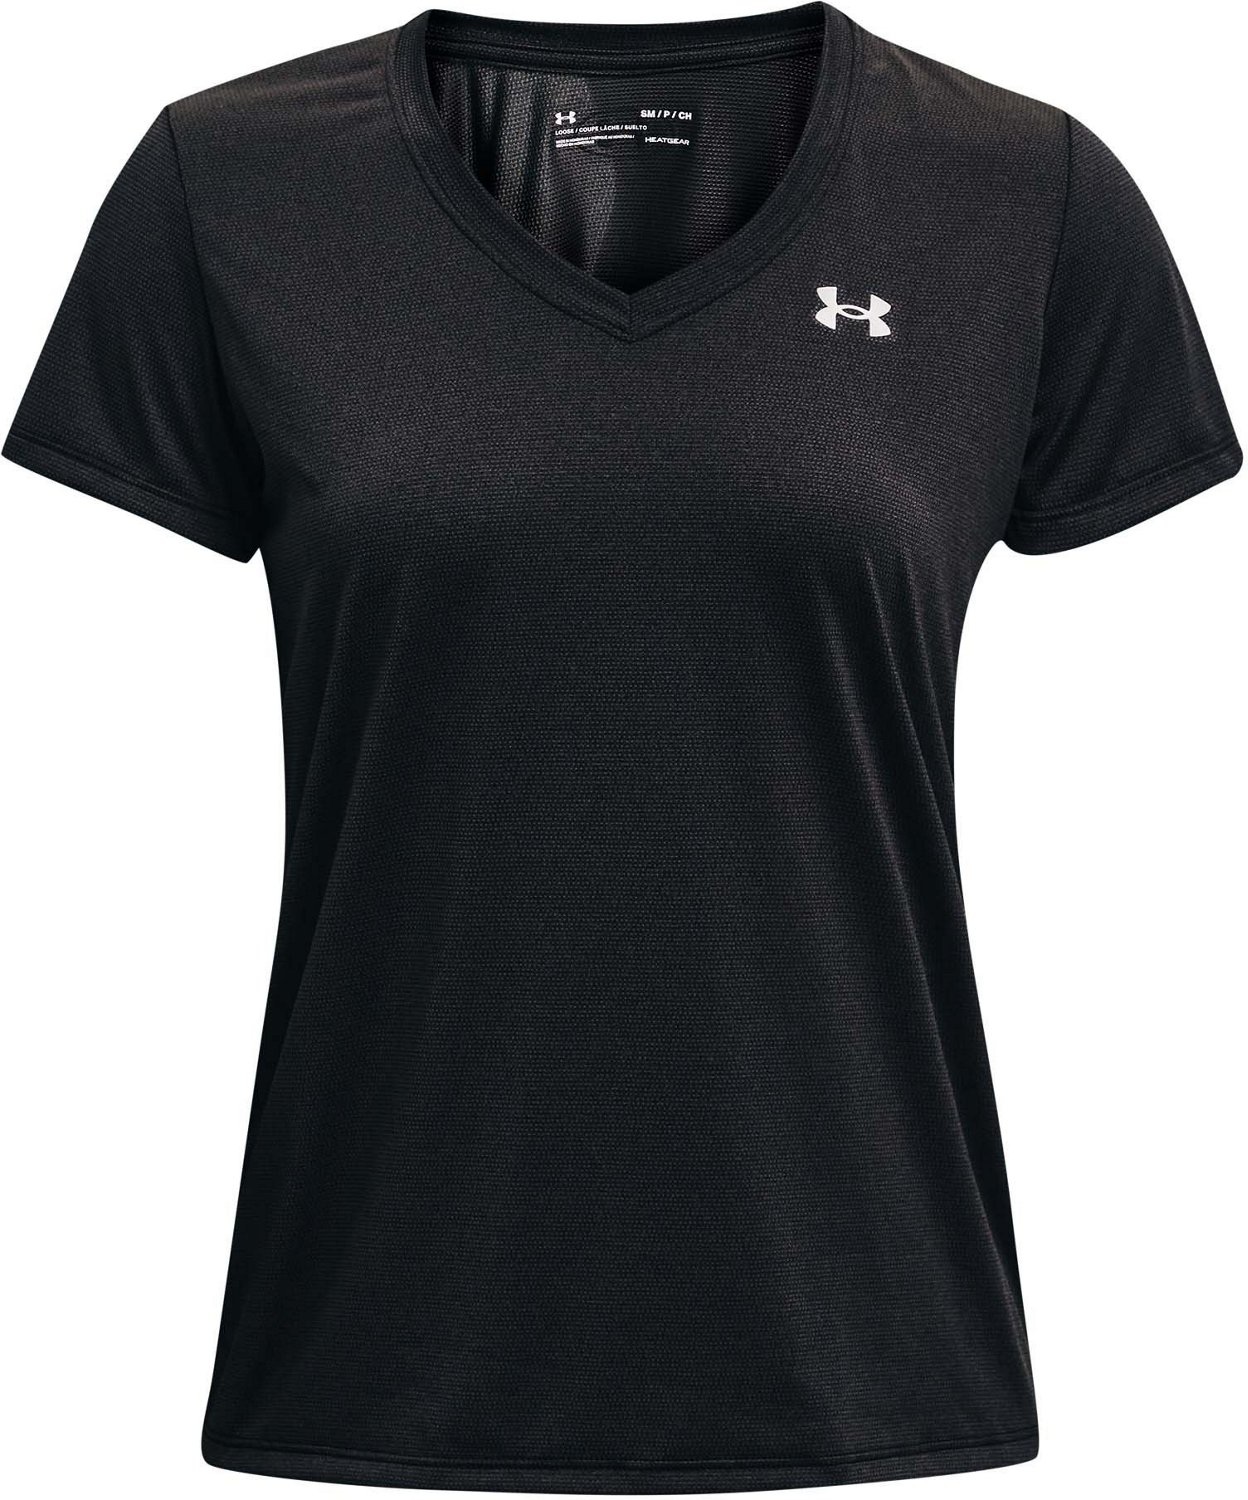 Under Armour™ Women's Bubble Tech Heather V-neck T-shirt | Academy